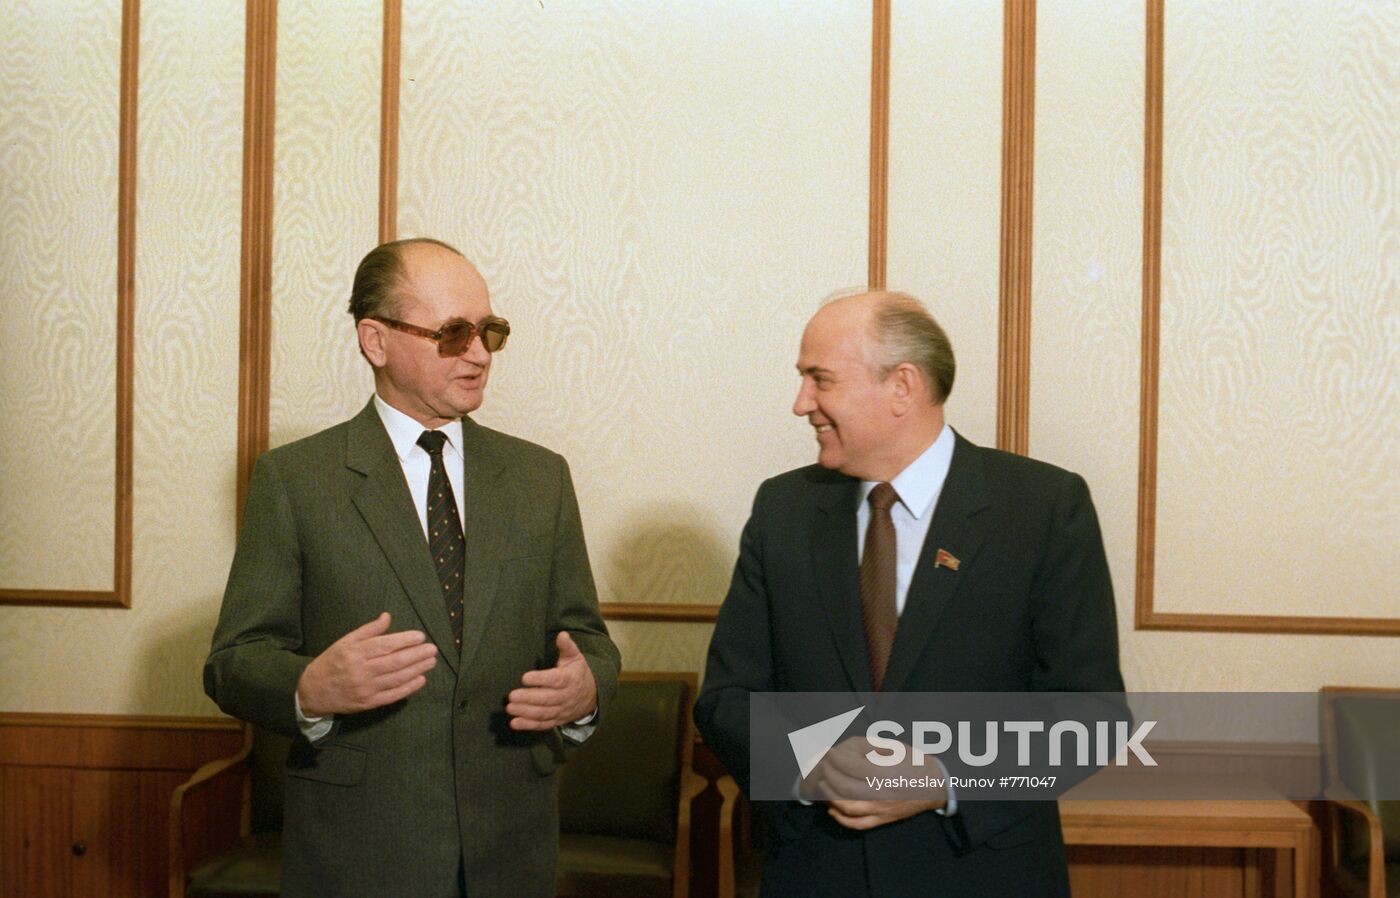 Mikhail Gorbachev and Wojciech Jaruzelski